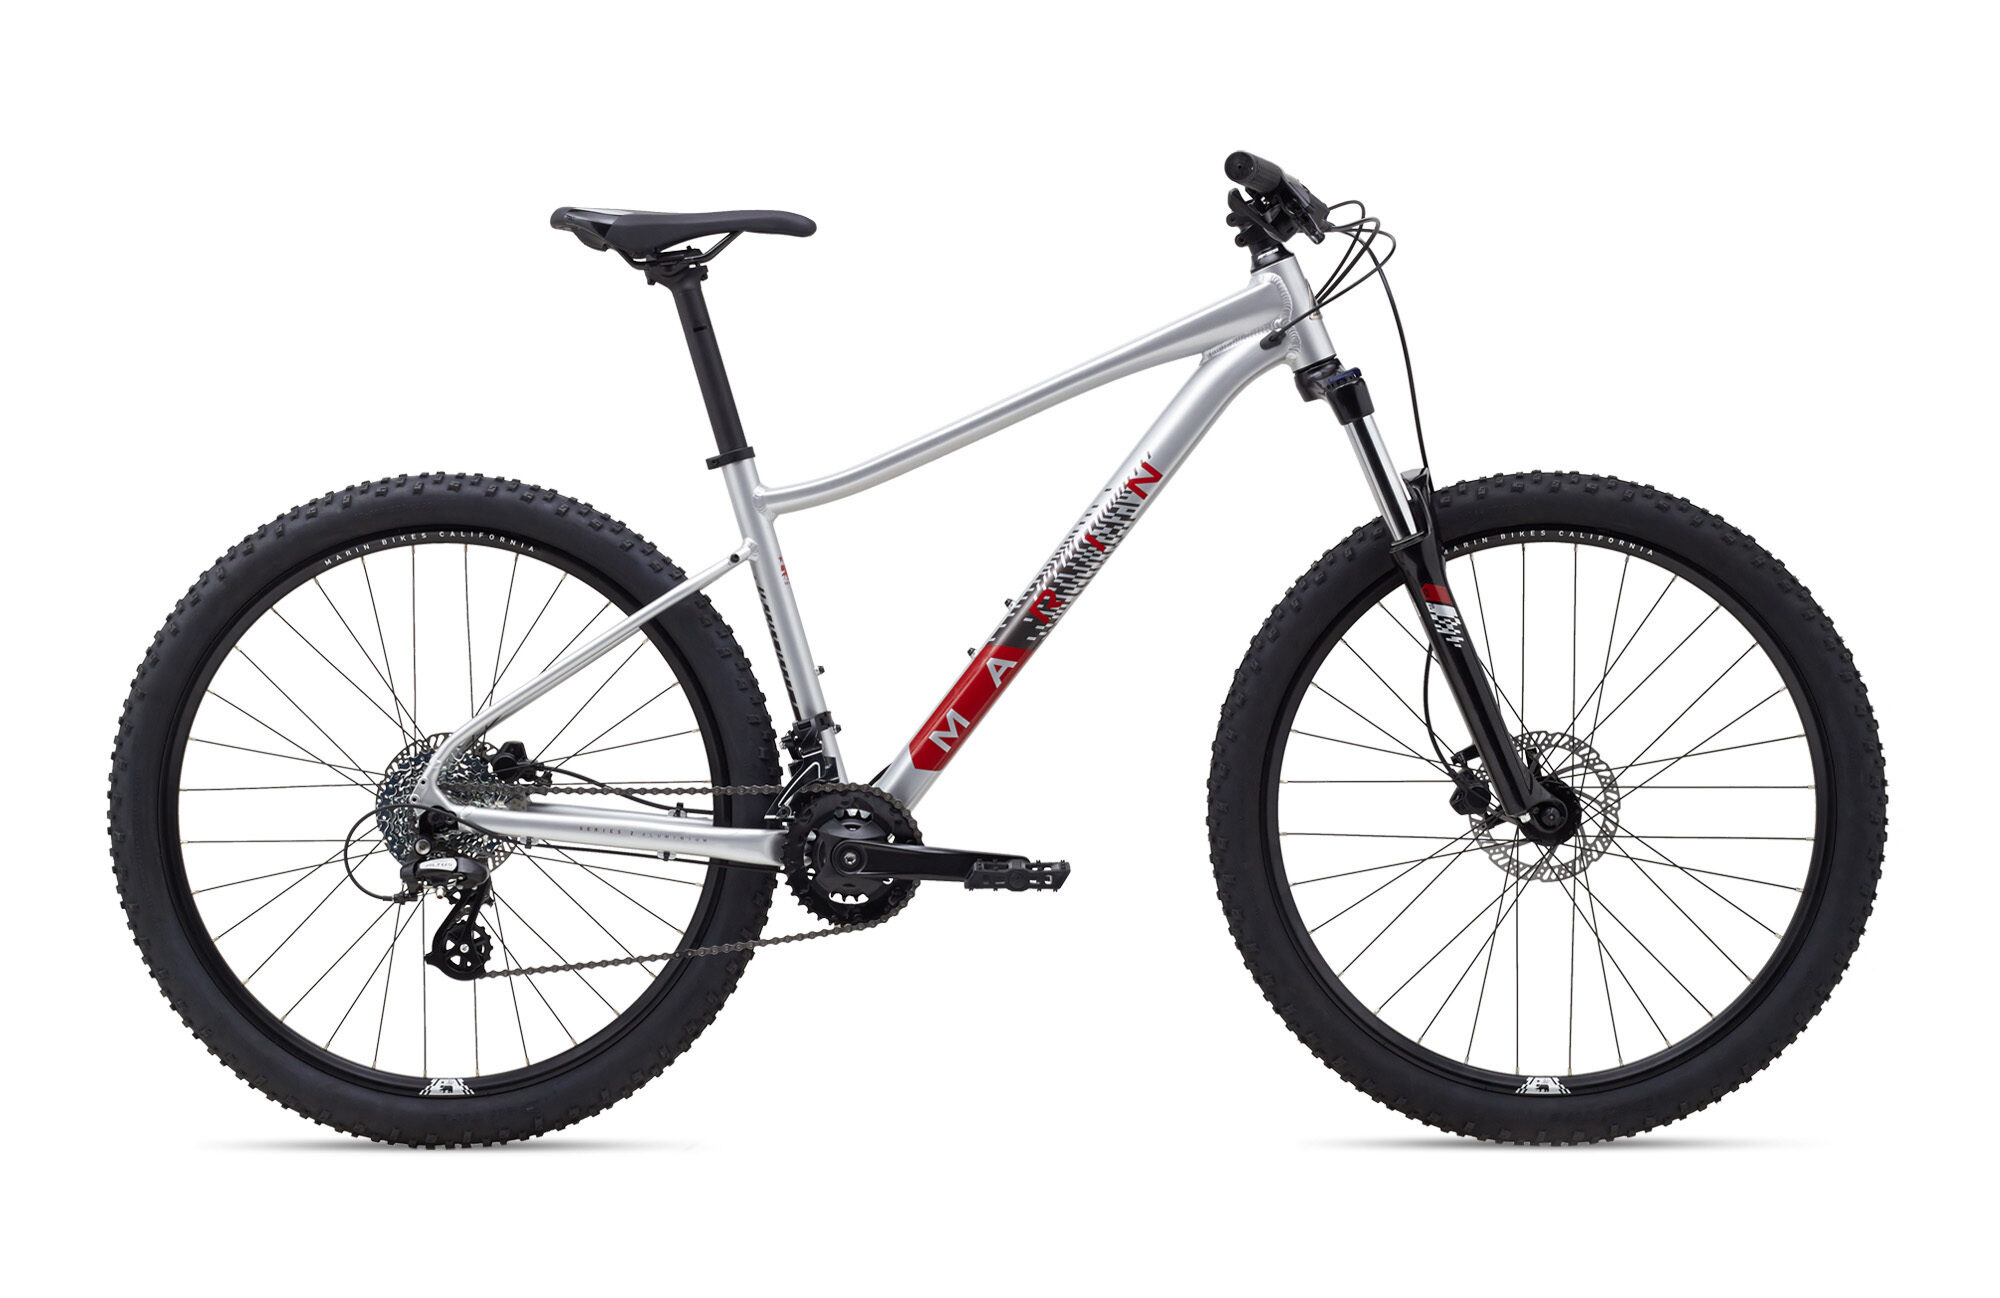 genesis 6061 mountain bike